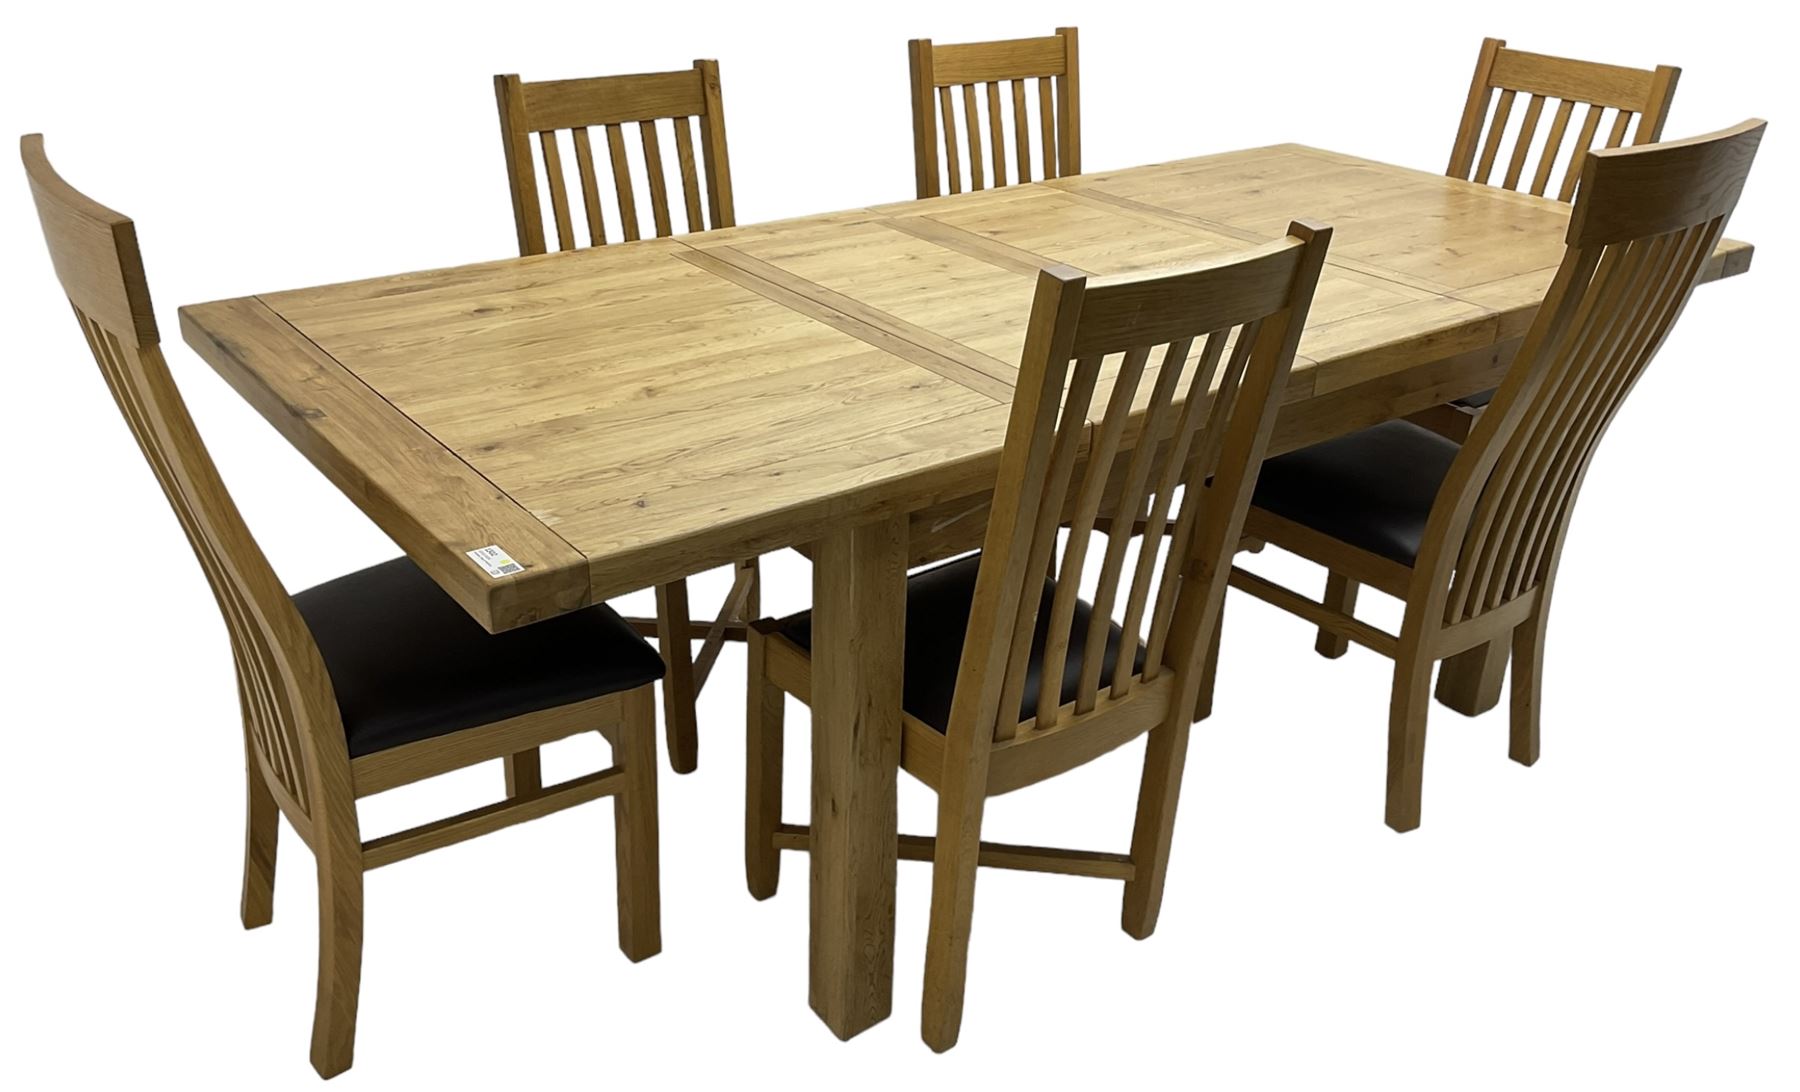 Oak rectangular dining table - Image 2 of 8